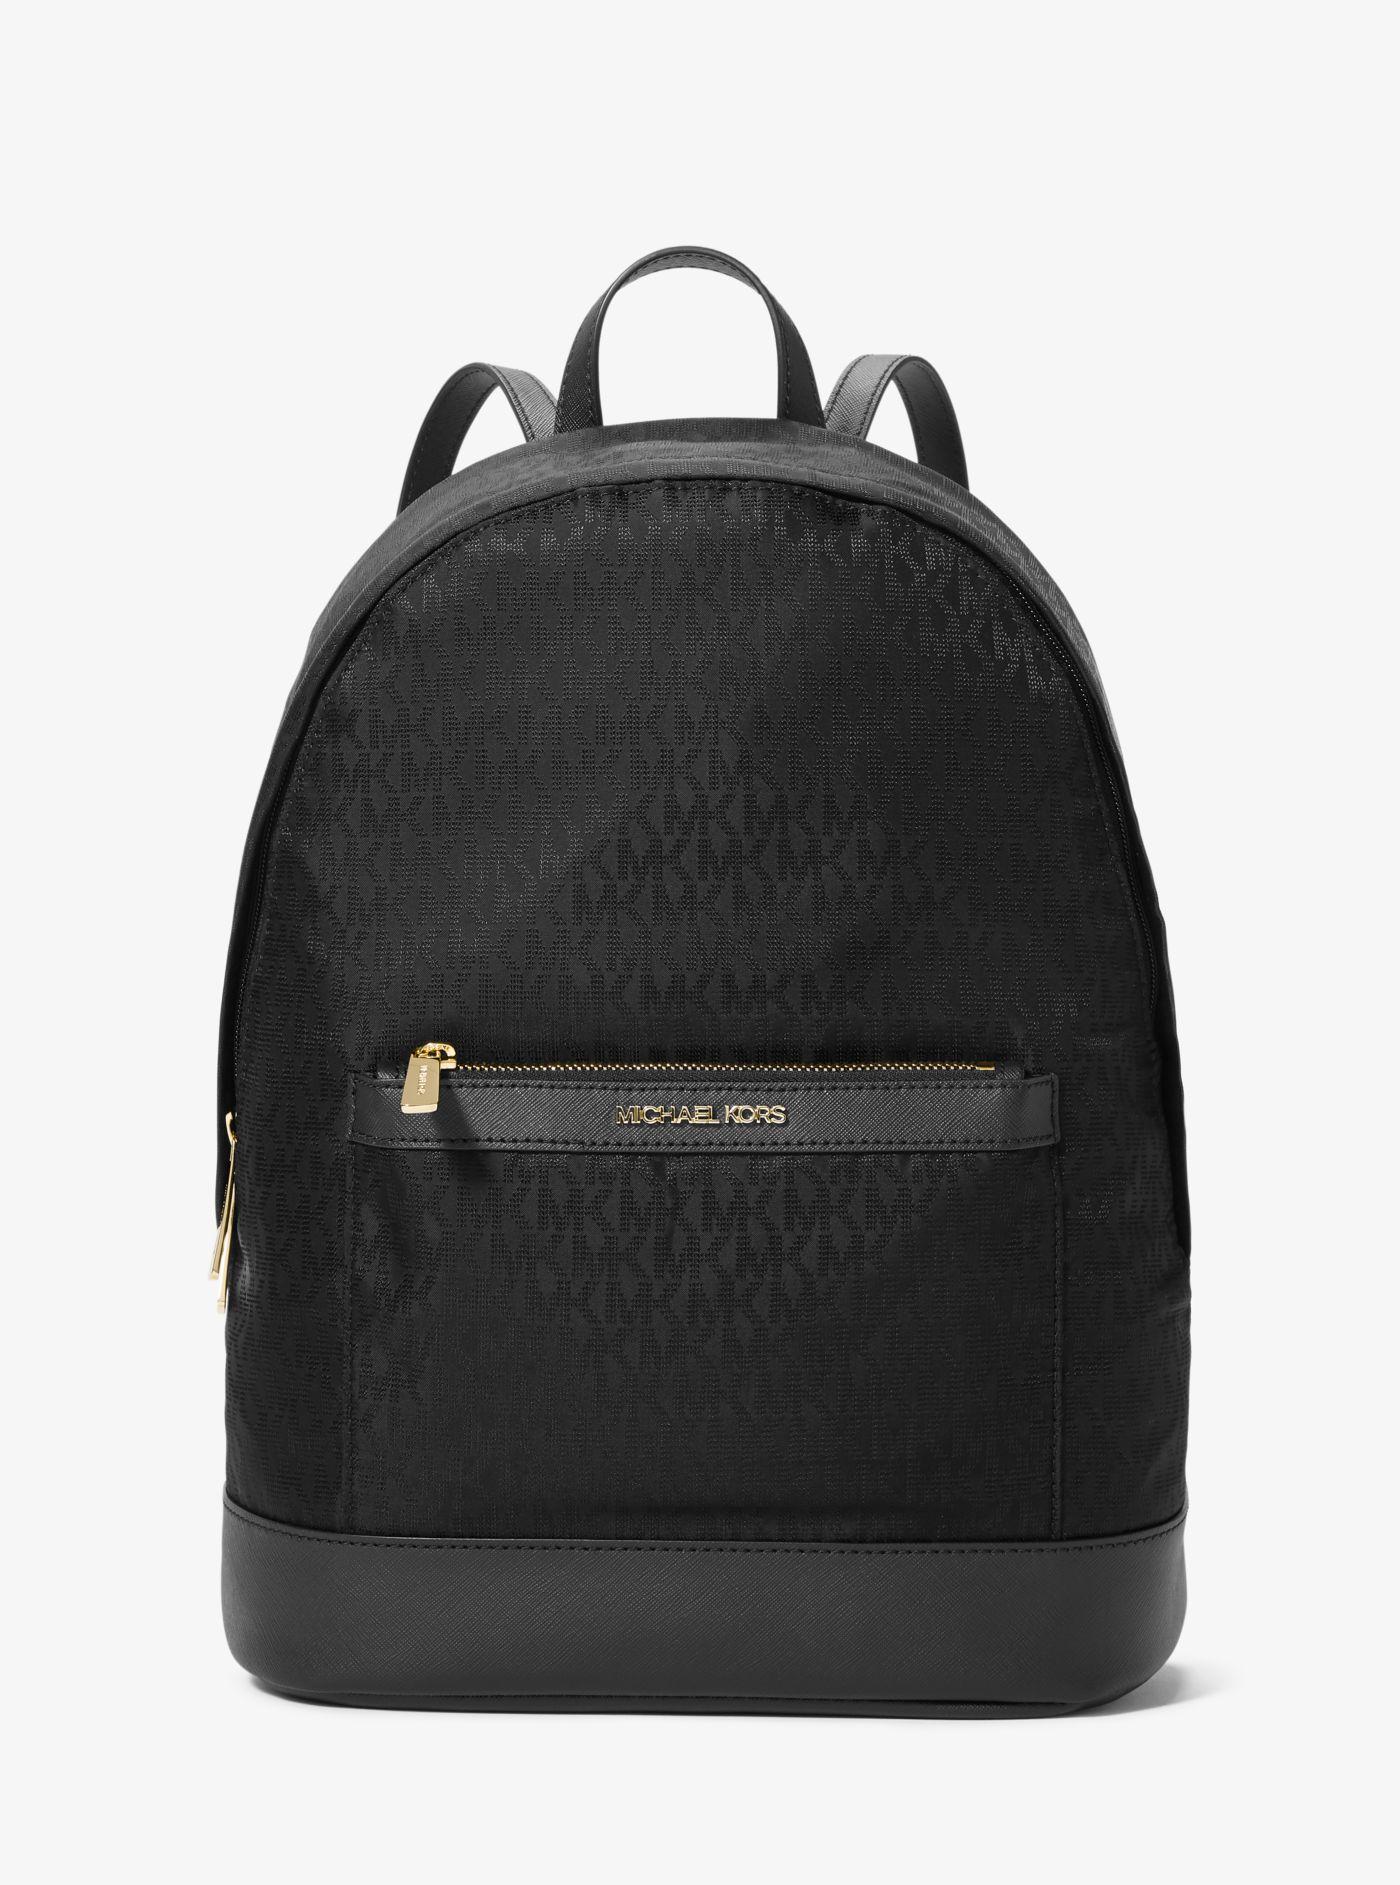 Michael Kors Synthetic Morgan Medium Logo Jacquard Backpack in Black - Lyst